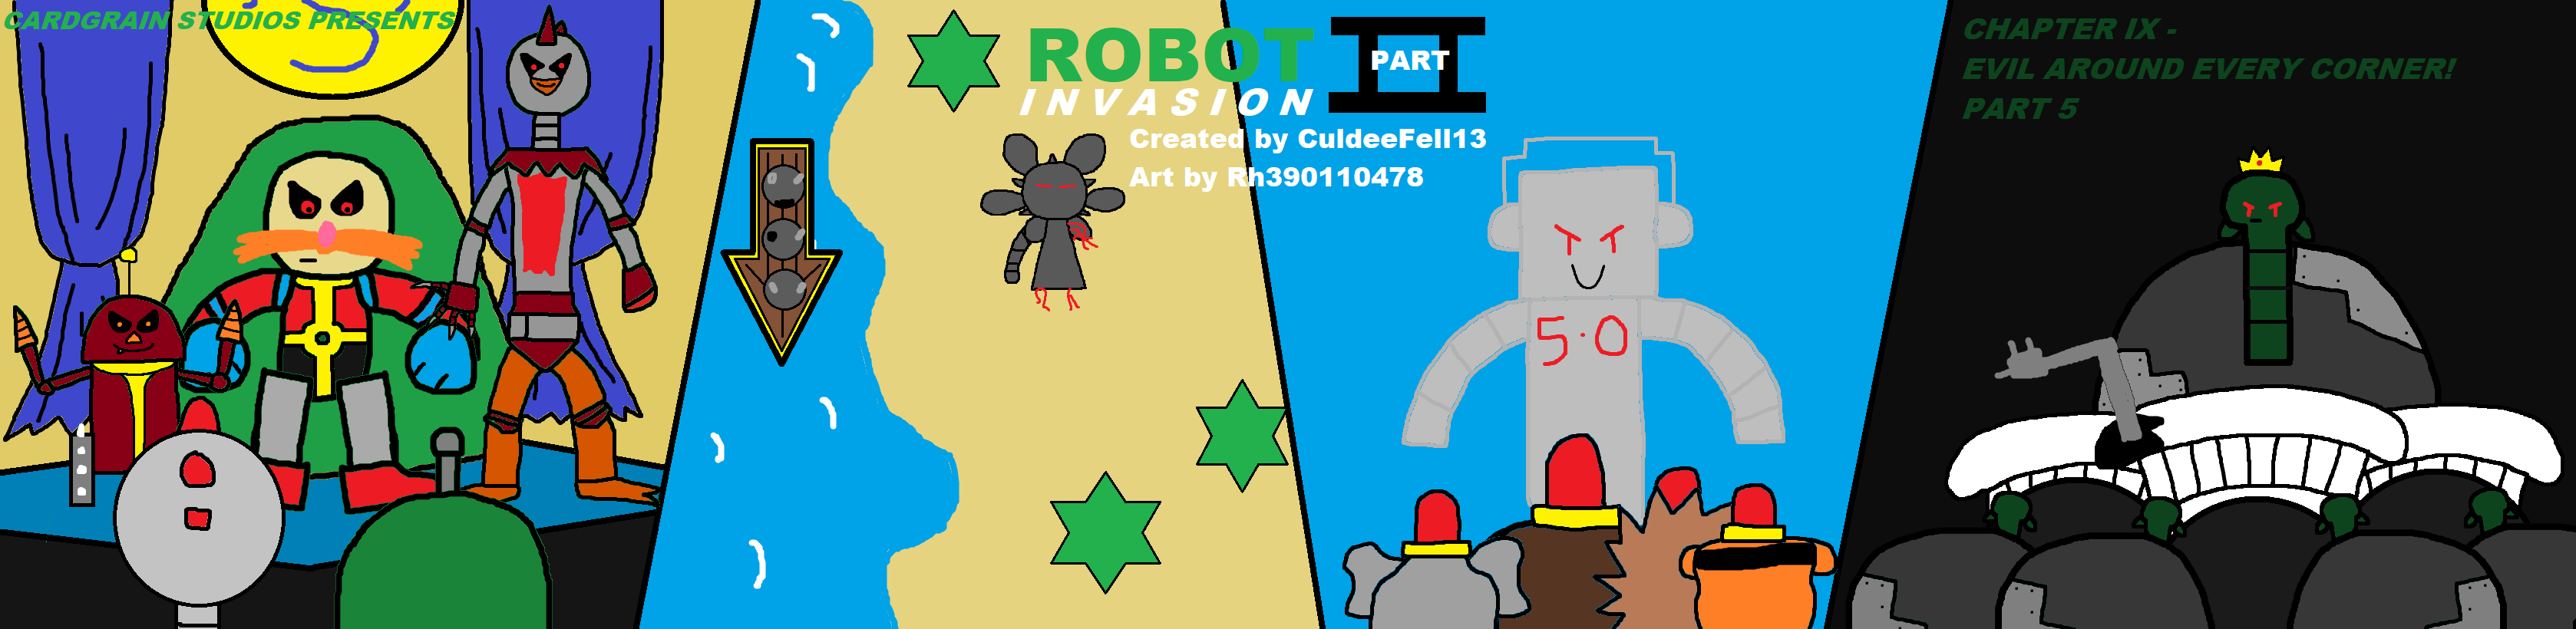 Robot Invasion Part Ii Sml Fanon Wiki Fandom - roblox boombox codes 2019 talki talki